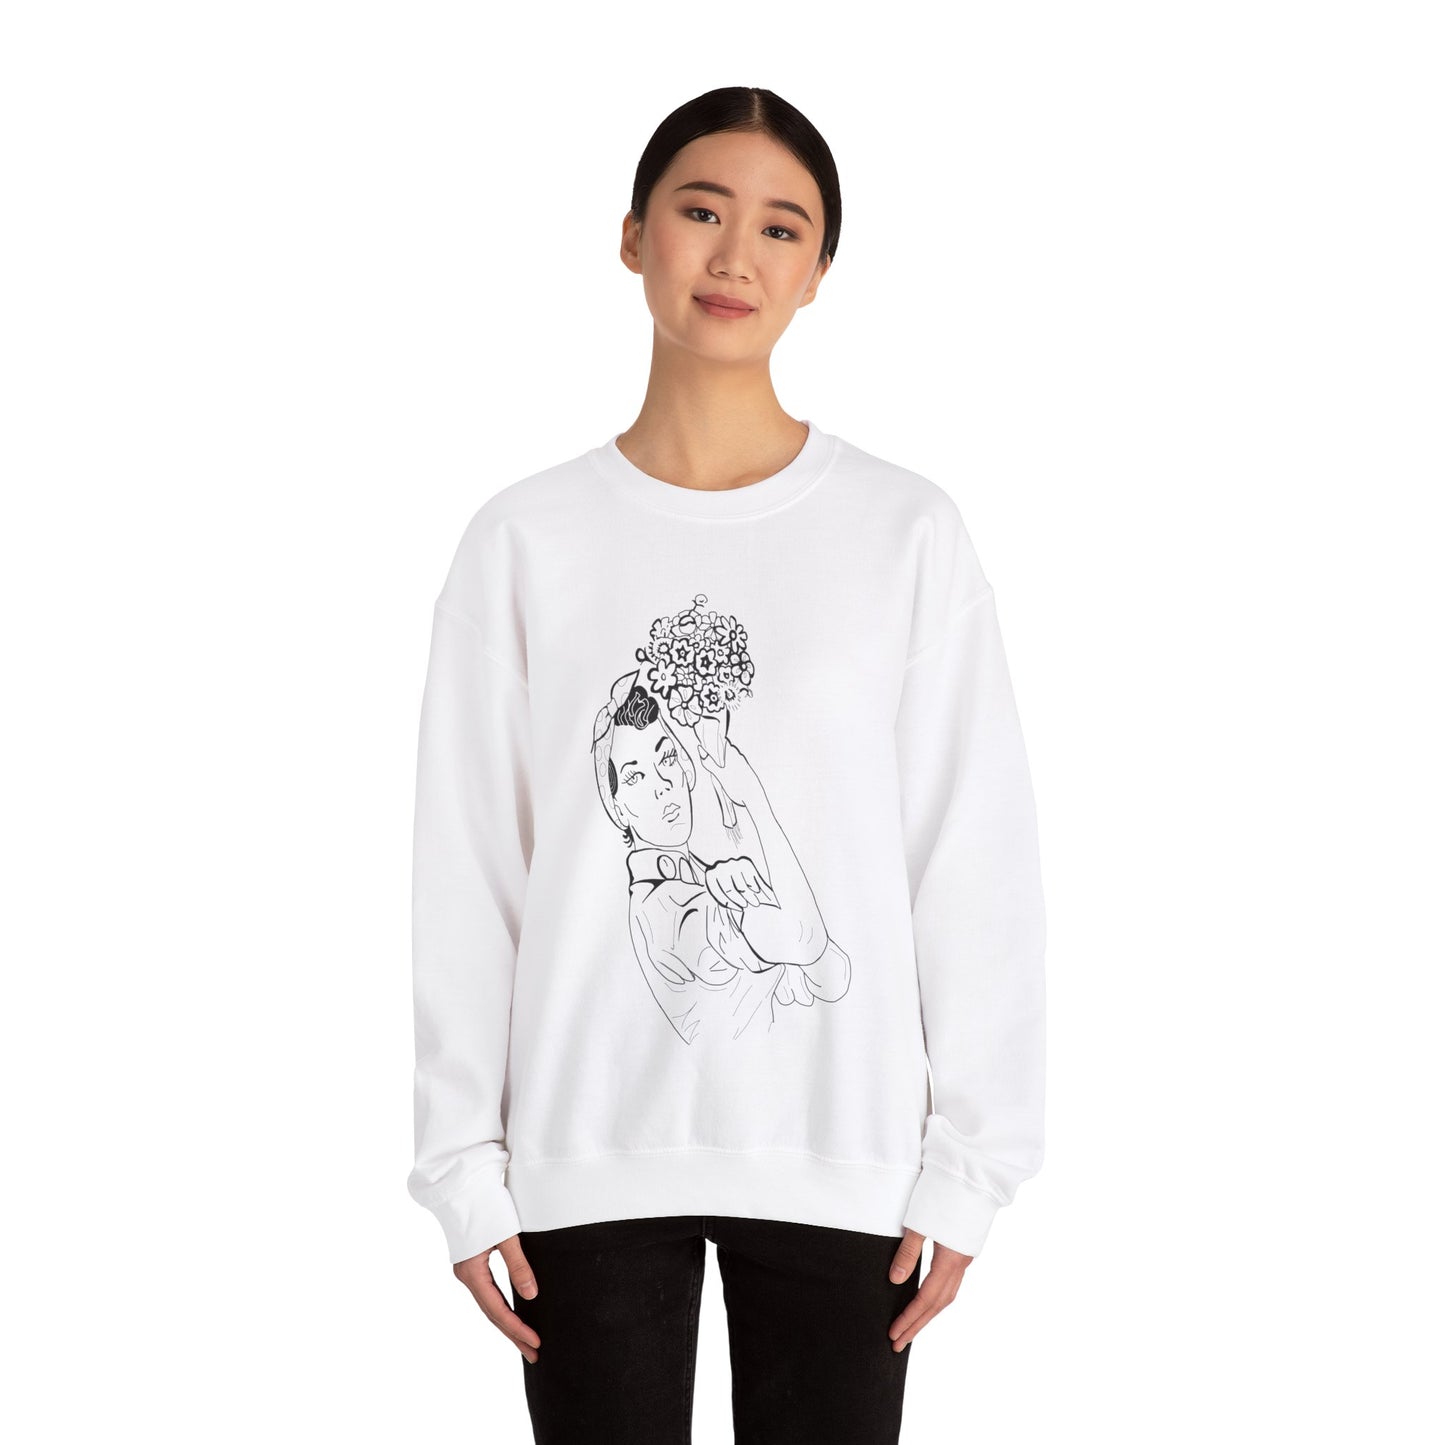 Rosie the Rivetor Crewneck Sweatshirt